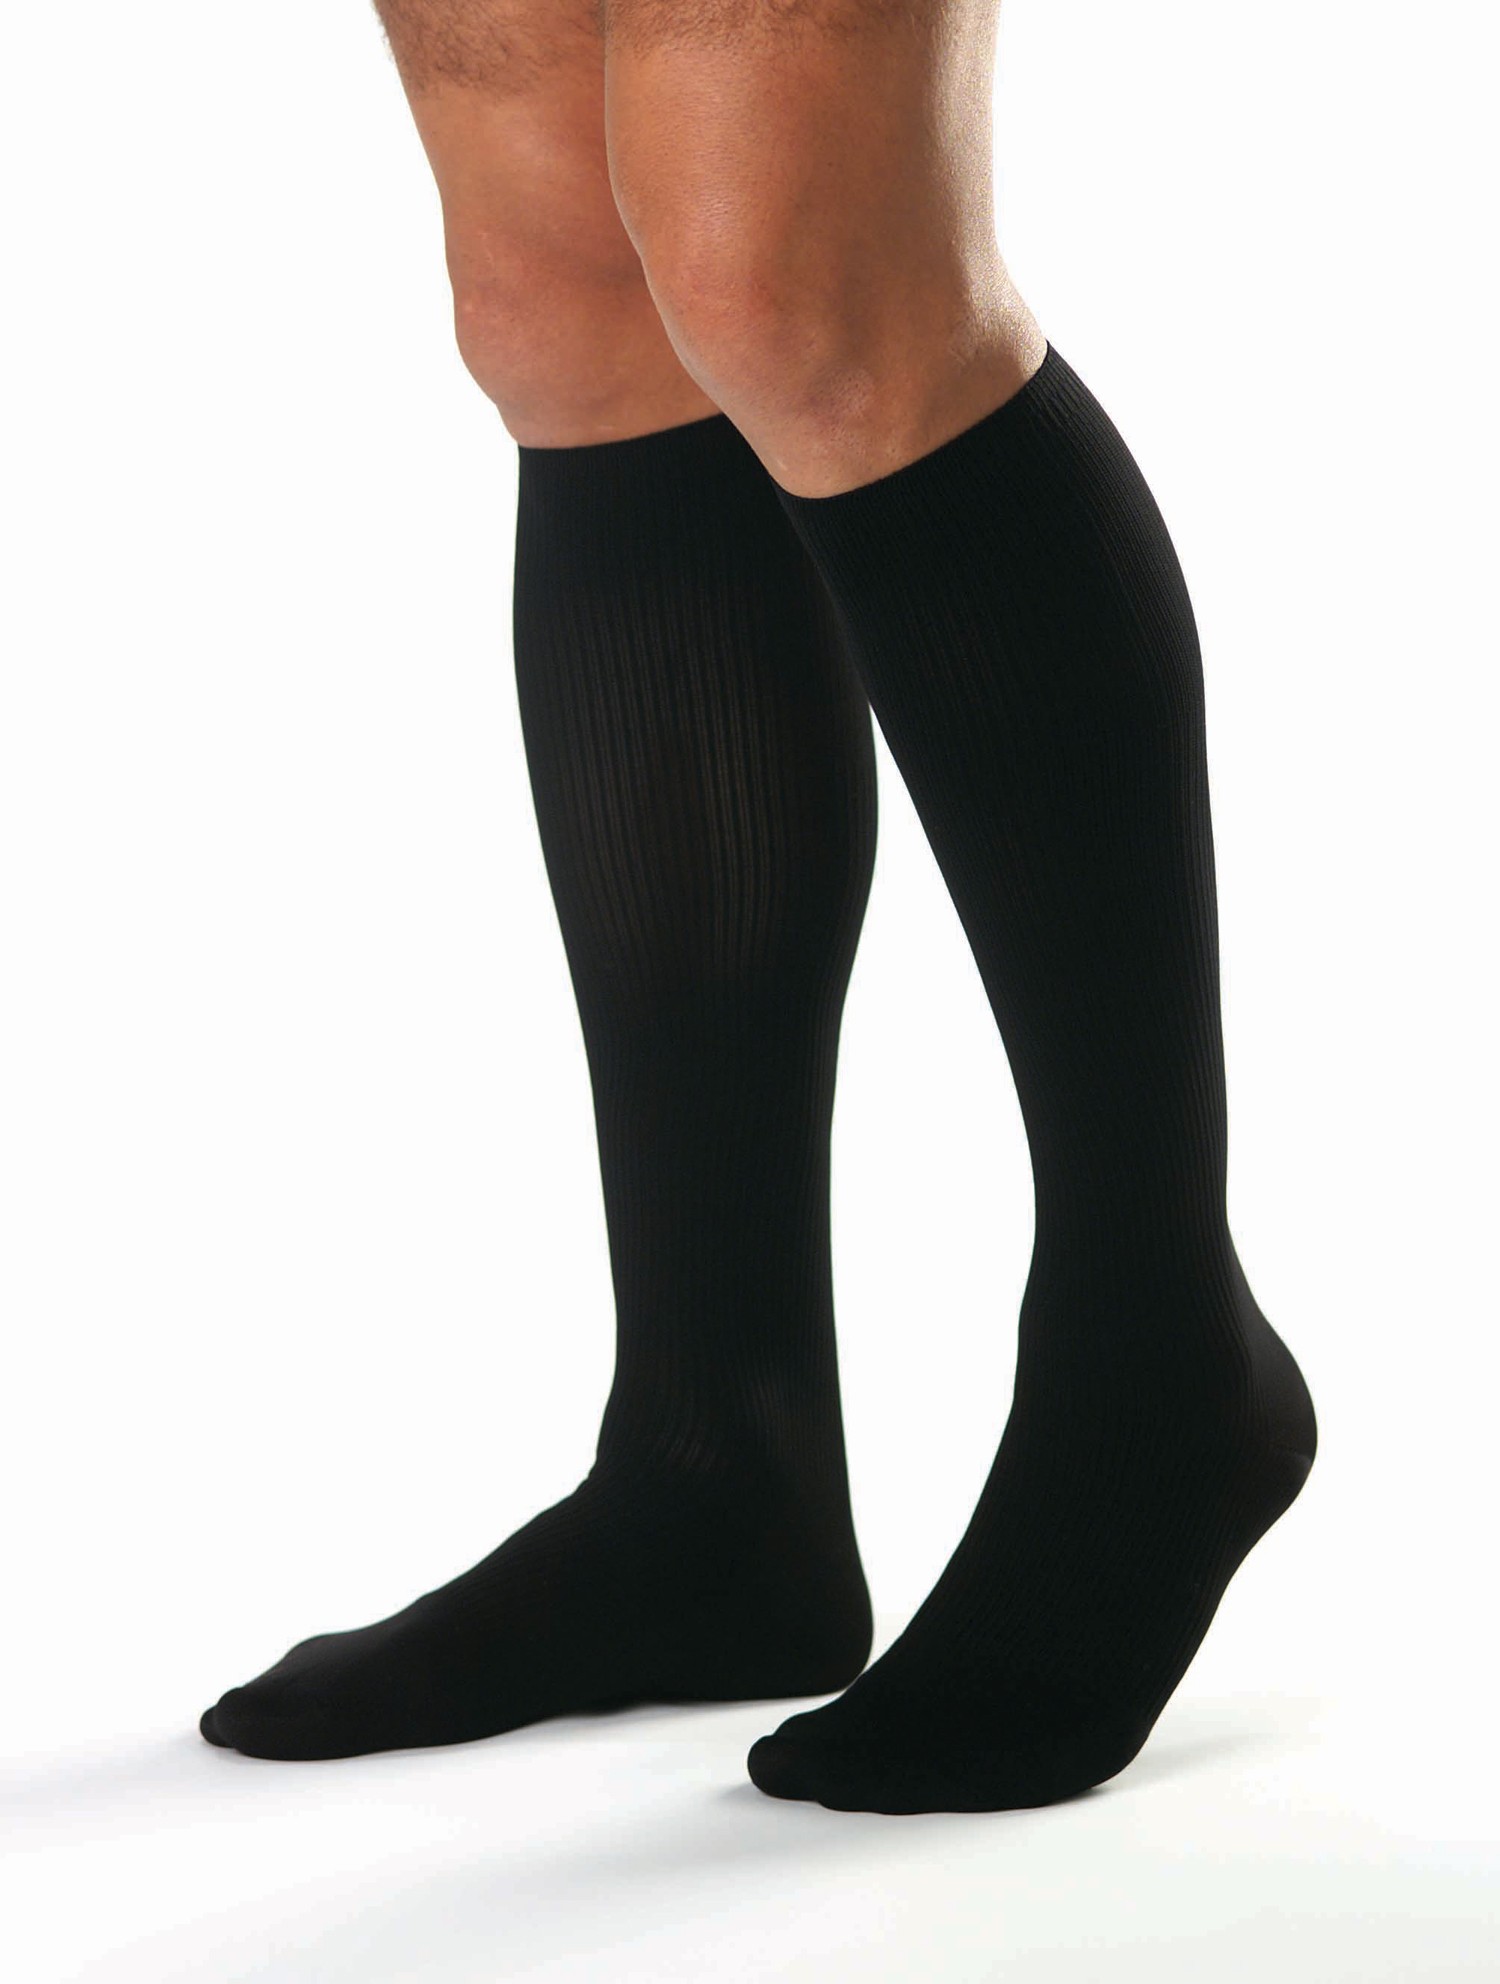 Why you should wear compression socks after running - Gardamed